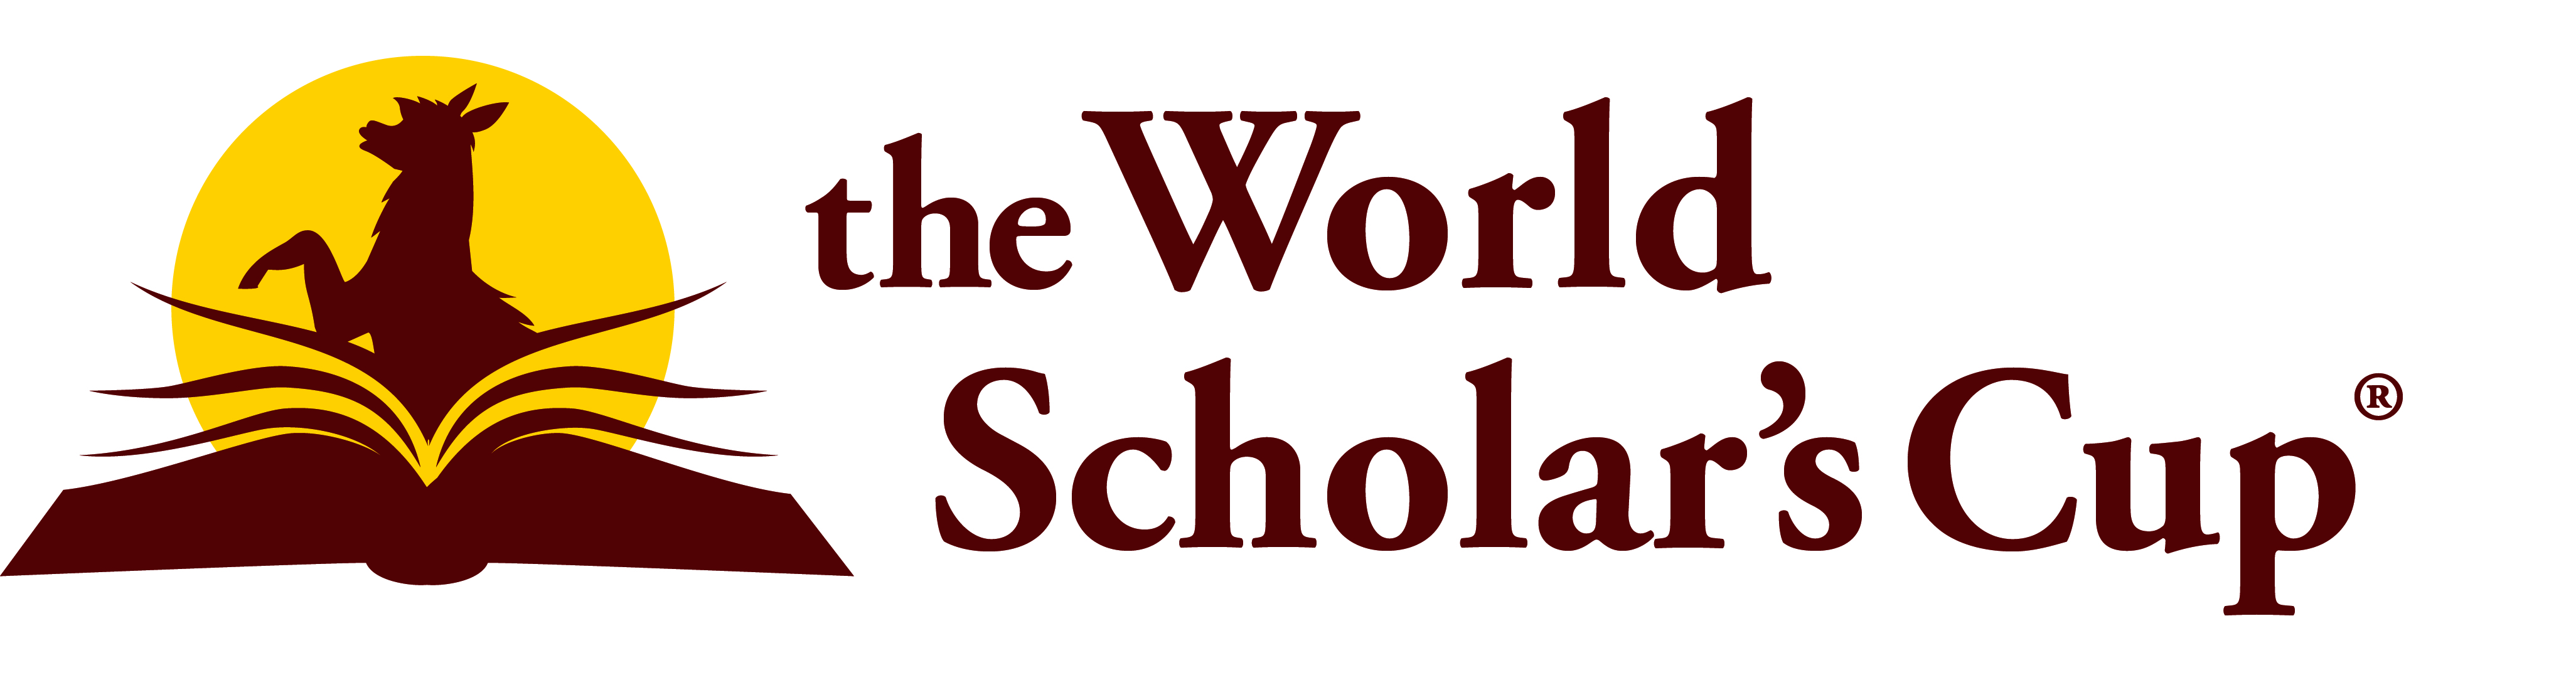 World Scholar's Cup Logo